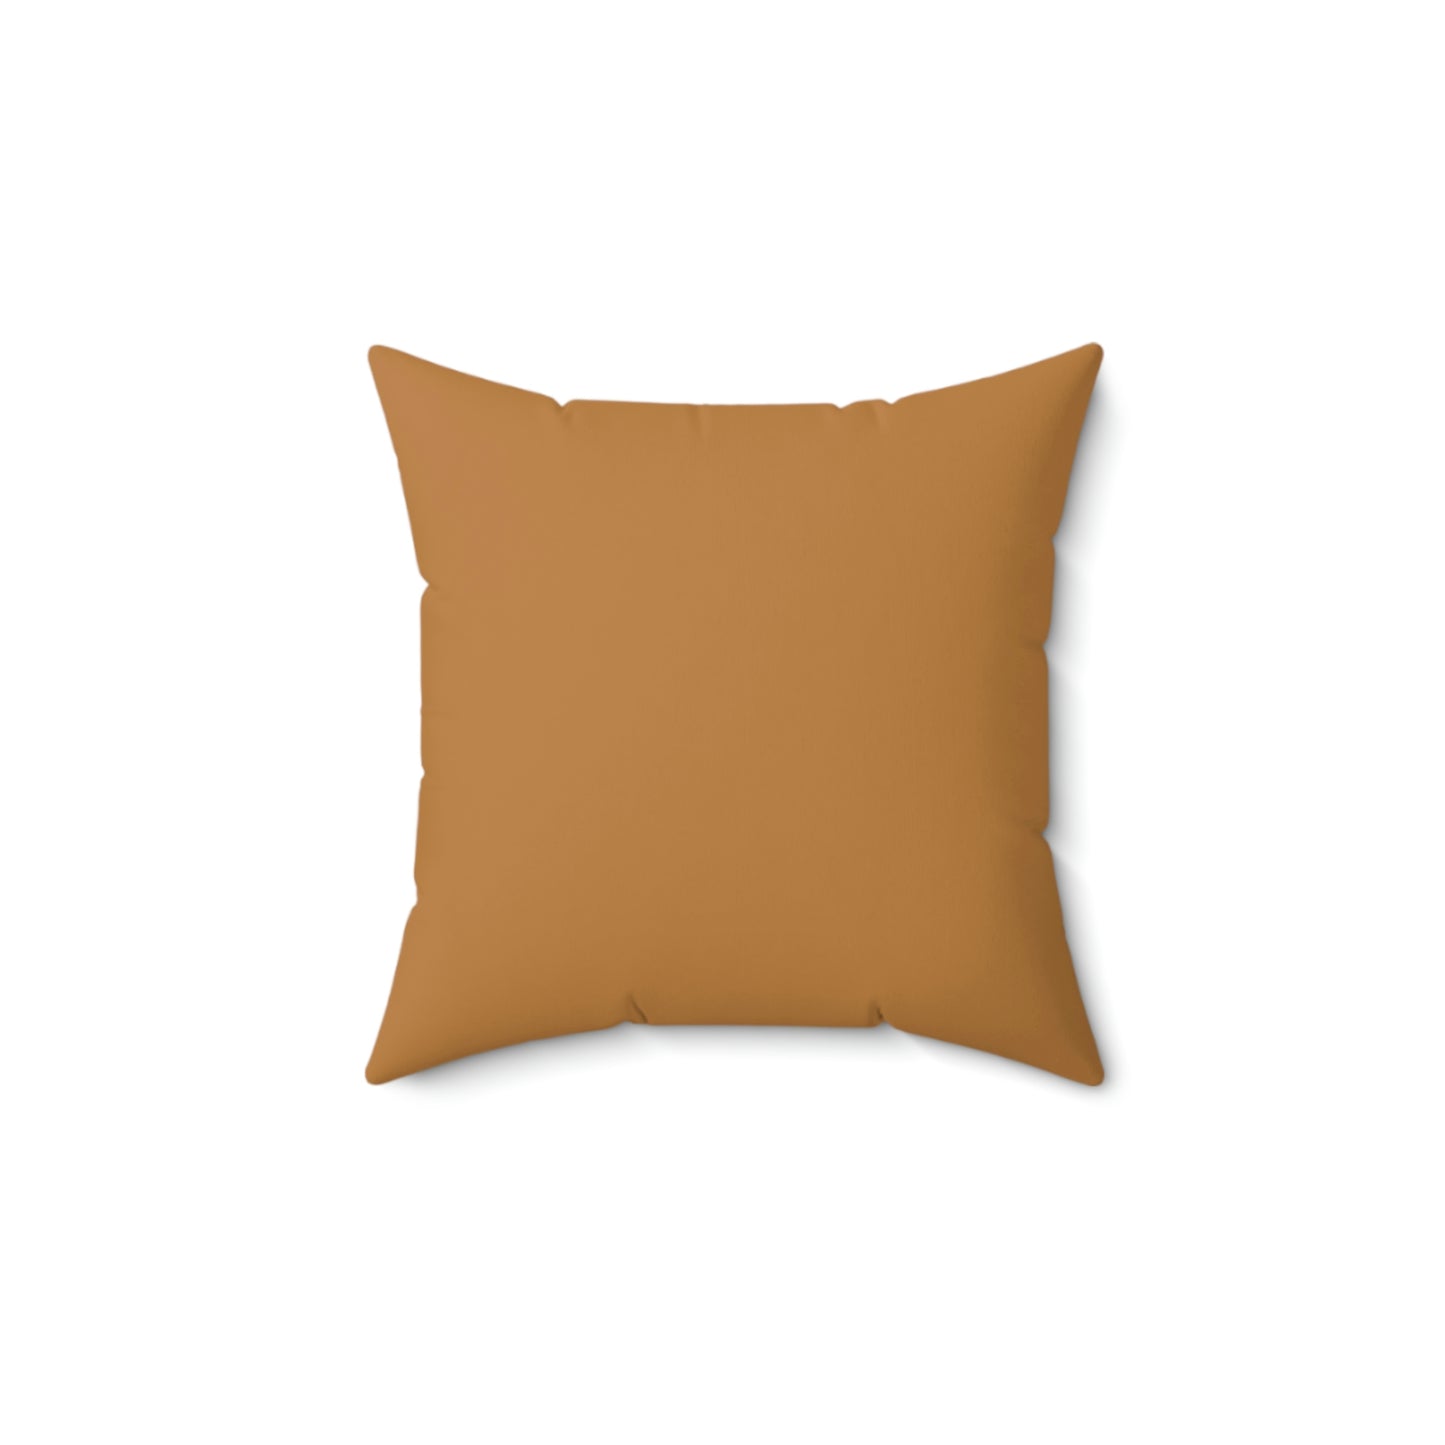 Spun Polyester Square Pillow Case "Retro Beach Sunset on Light Brown”